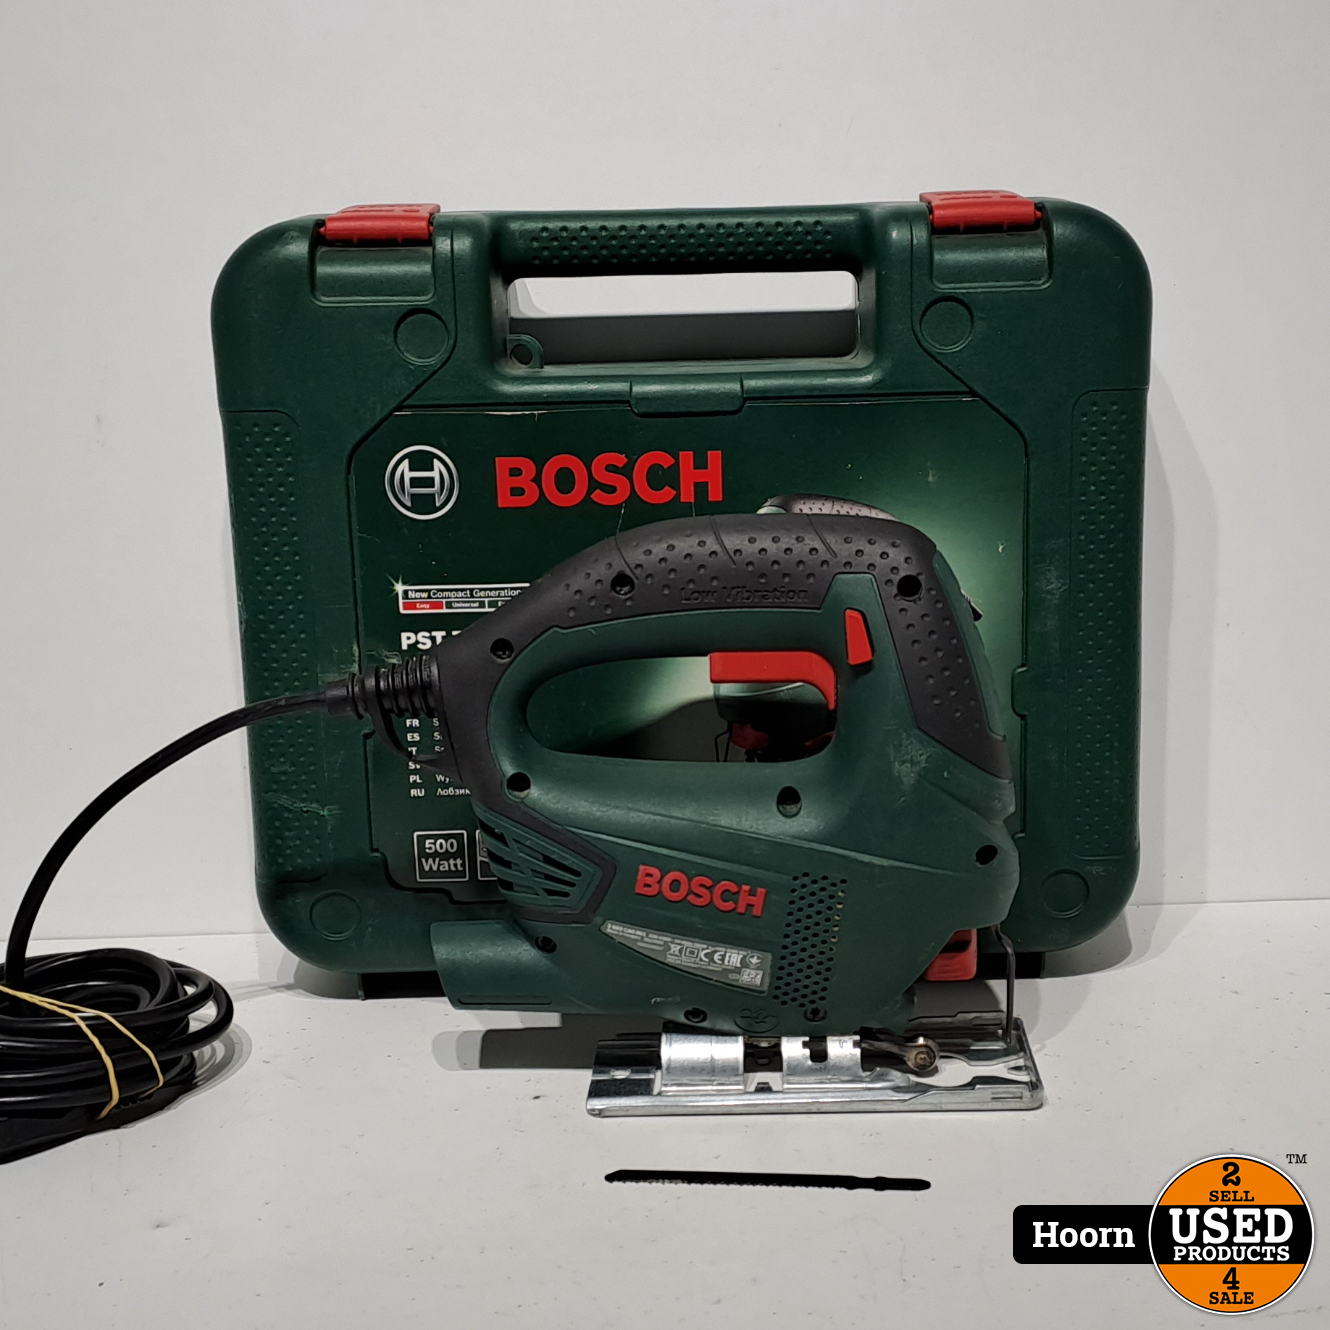 Bosch PST 700 Decoupeerzaag 500 Watt in Koffer - Used Products